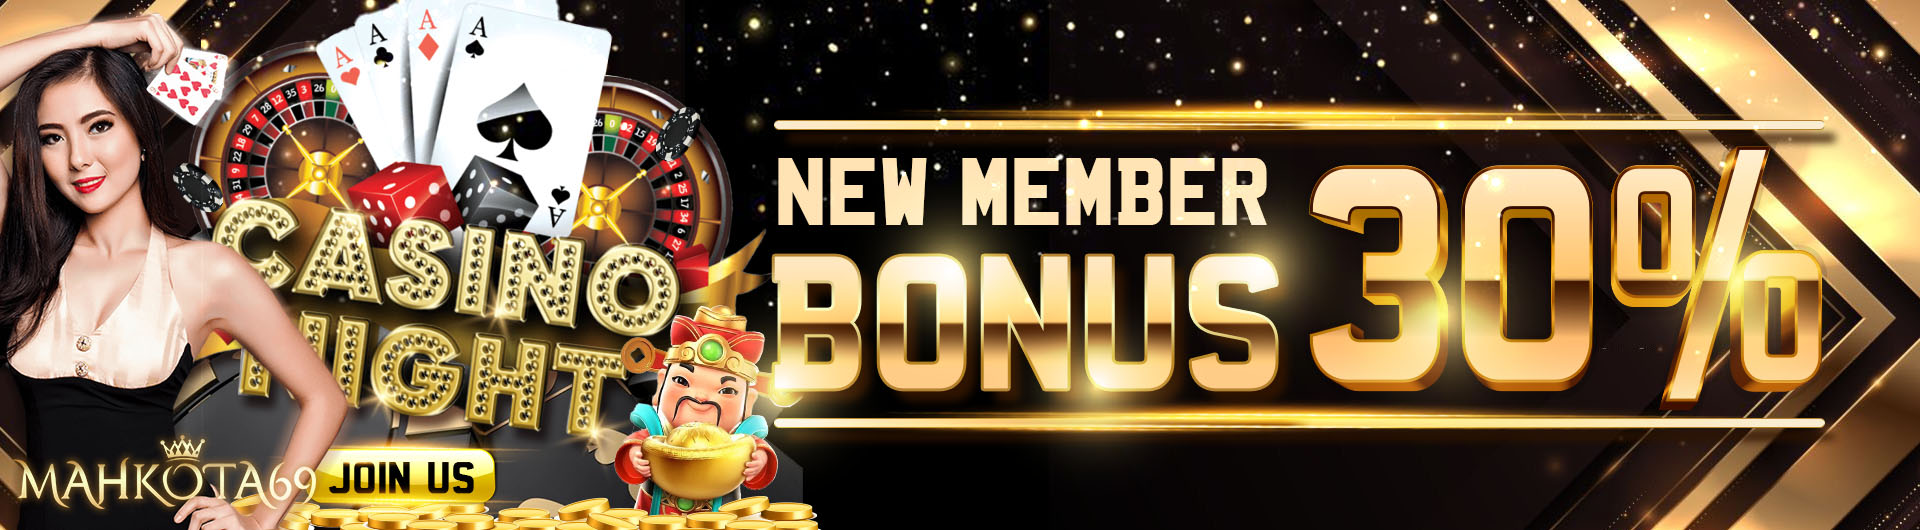 Bonus New Member Mahkota69